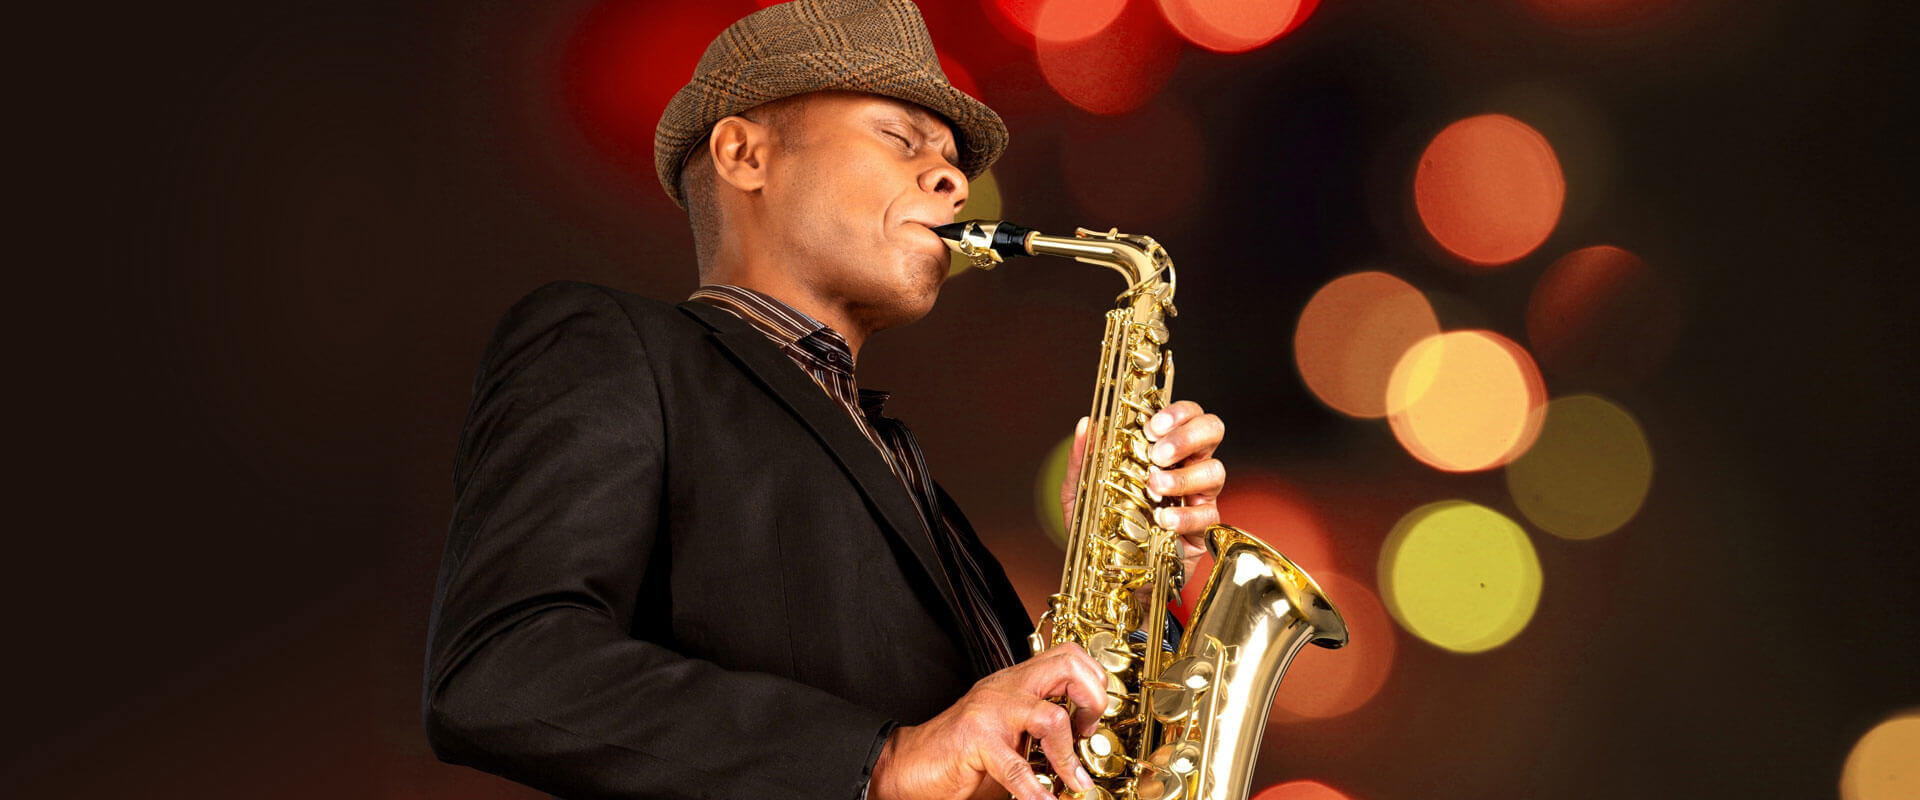 Saxophone Lessons Dallas, NC